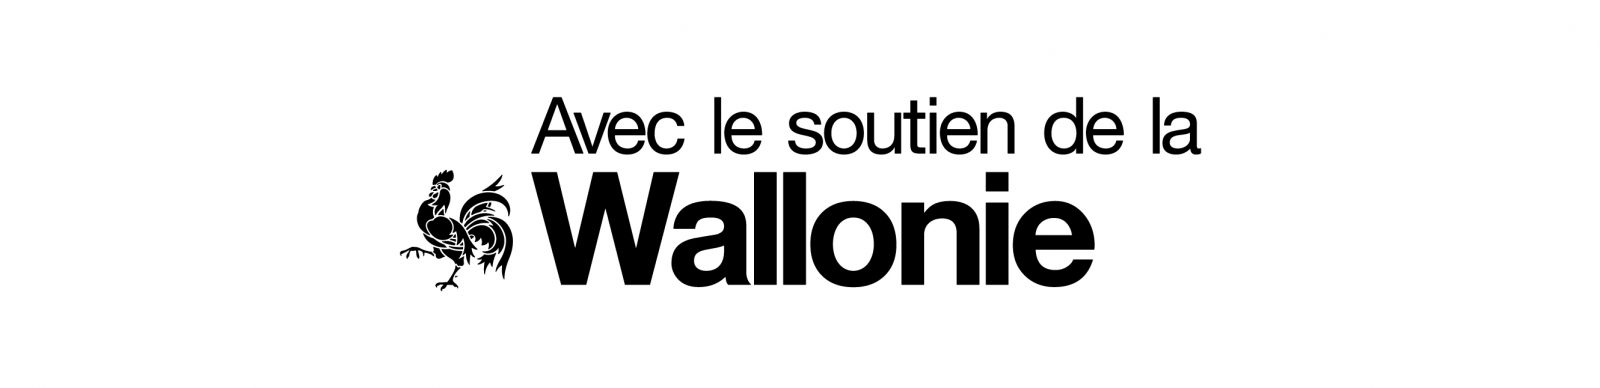 Portail vers la Wallonie